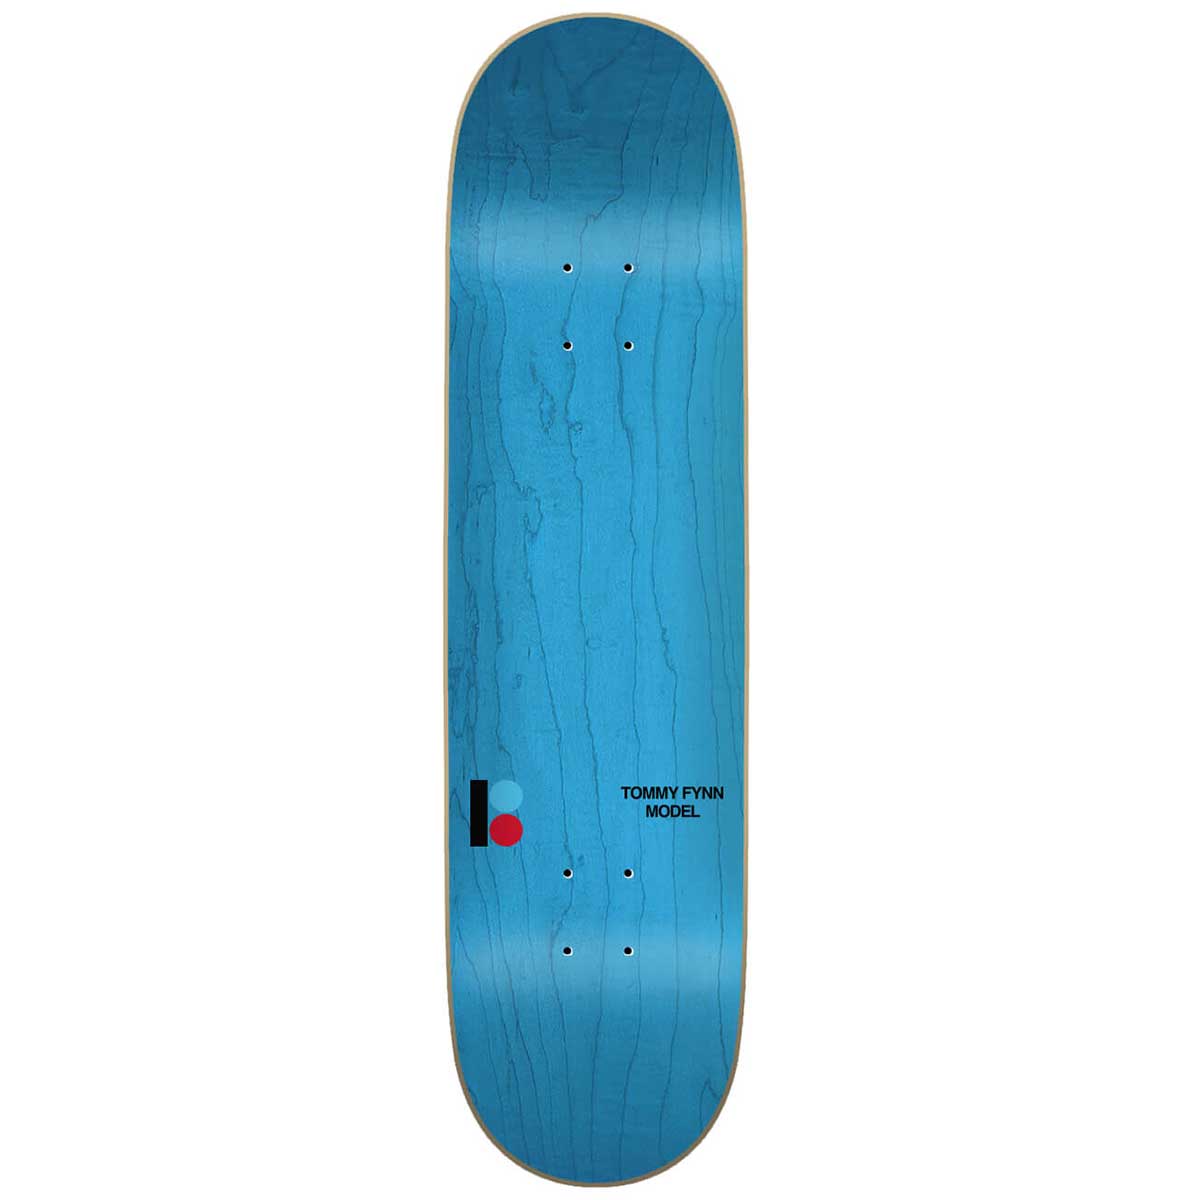 Plan B Skateboard Deck Tommy Fynn Andromeda 8.125" x 31.75" with Grip